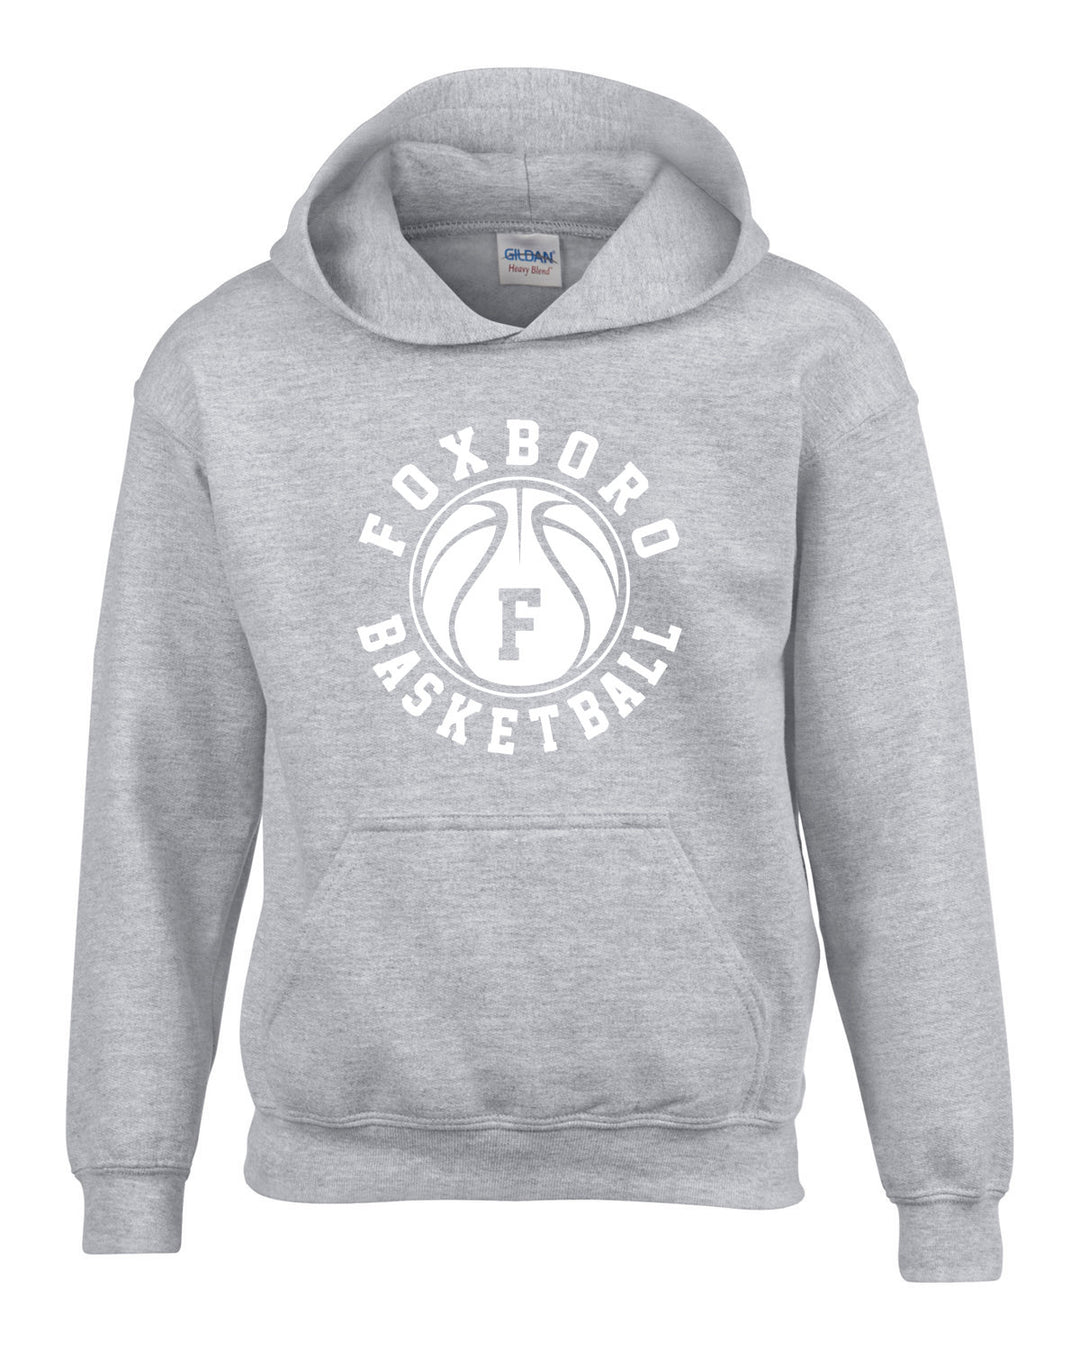 Foxboro Youth Basketball Gildan Youth Hooded Sweatshirt (G185B)